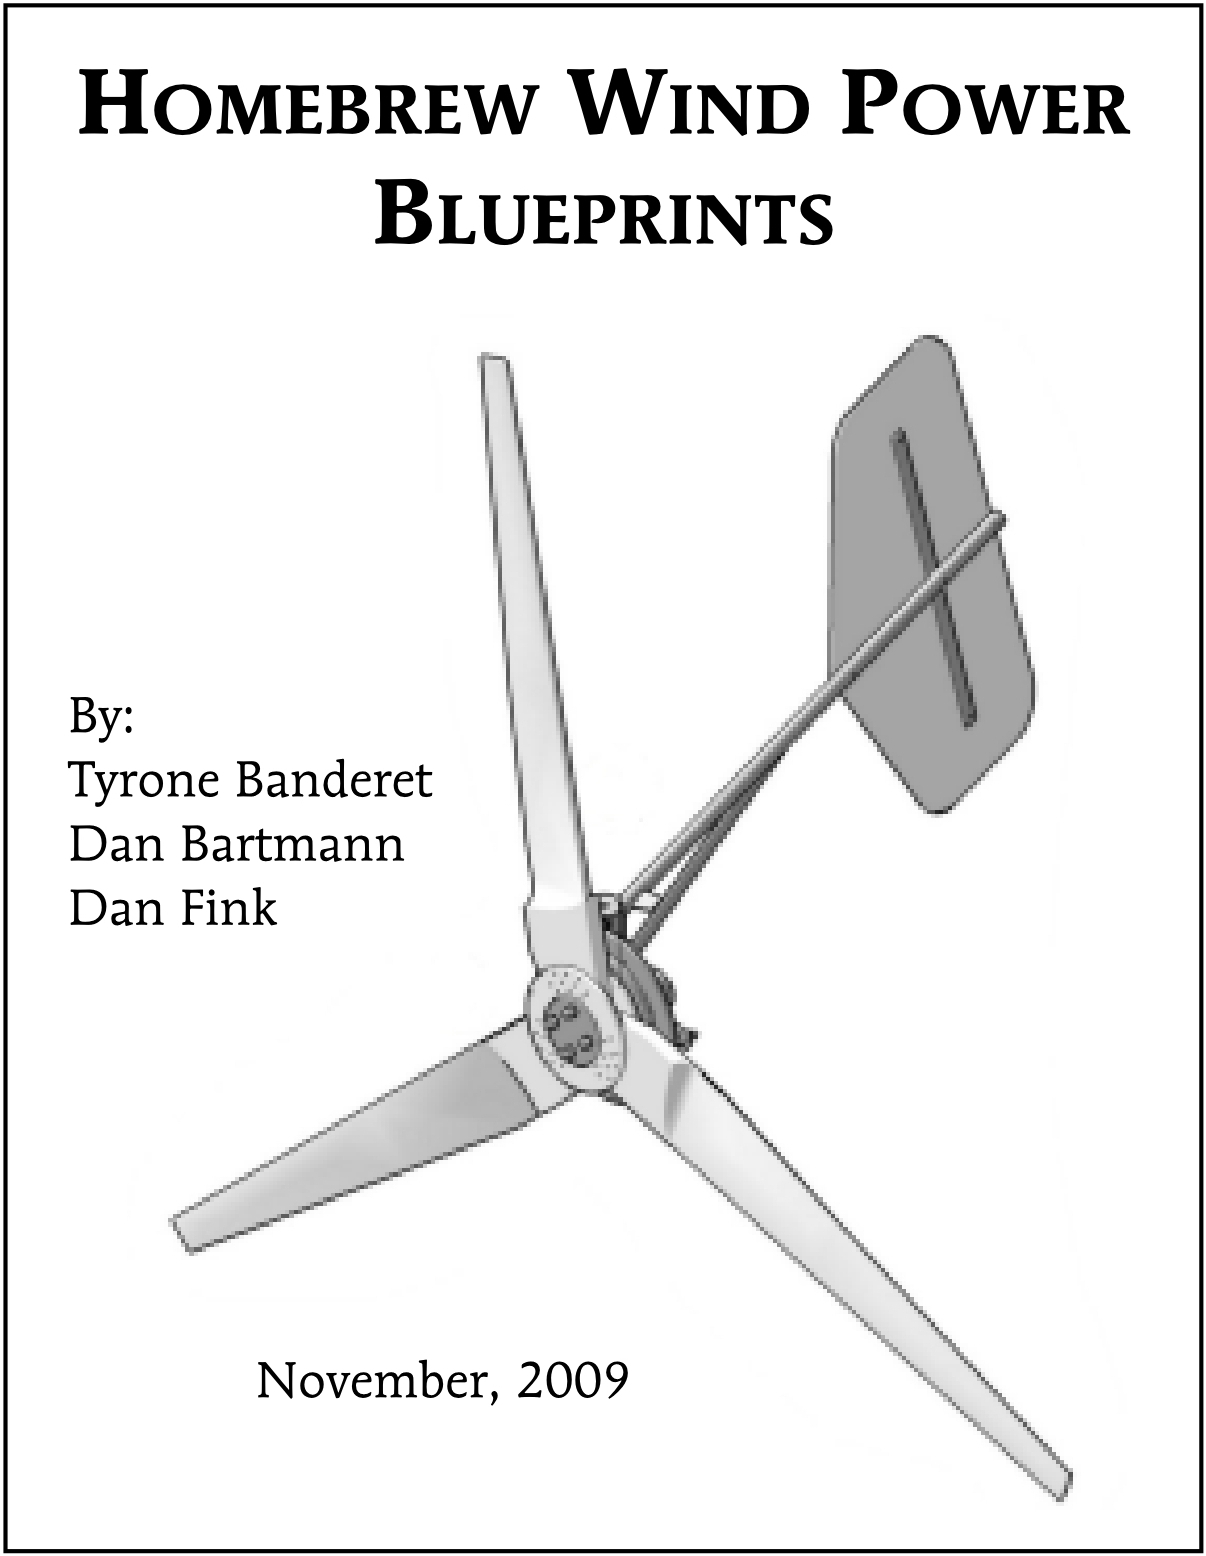 Re: darrieus wind trubine blade shape